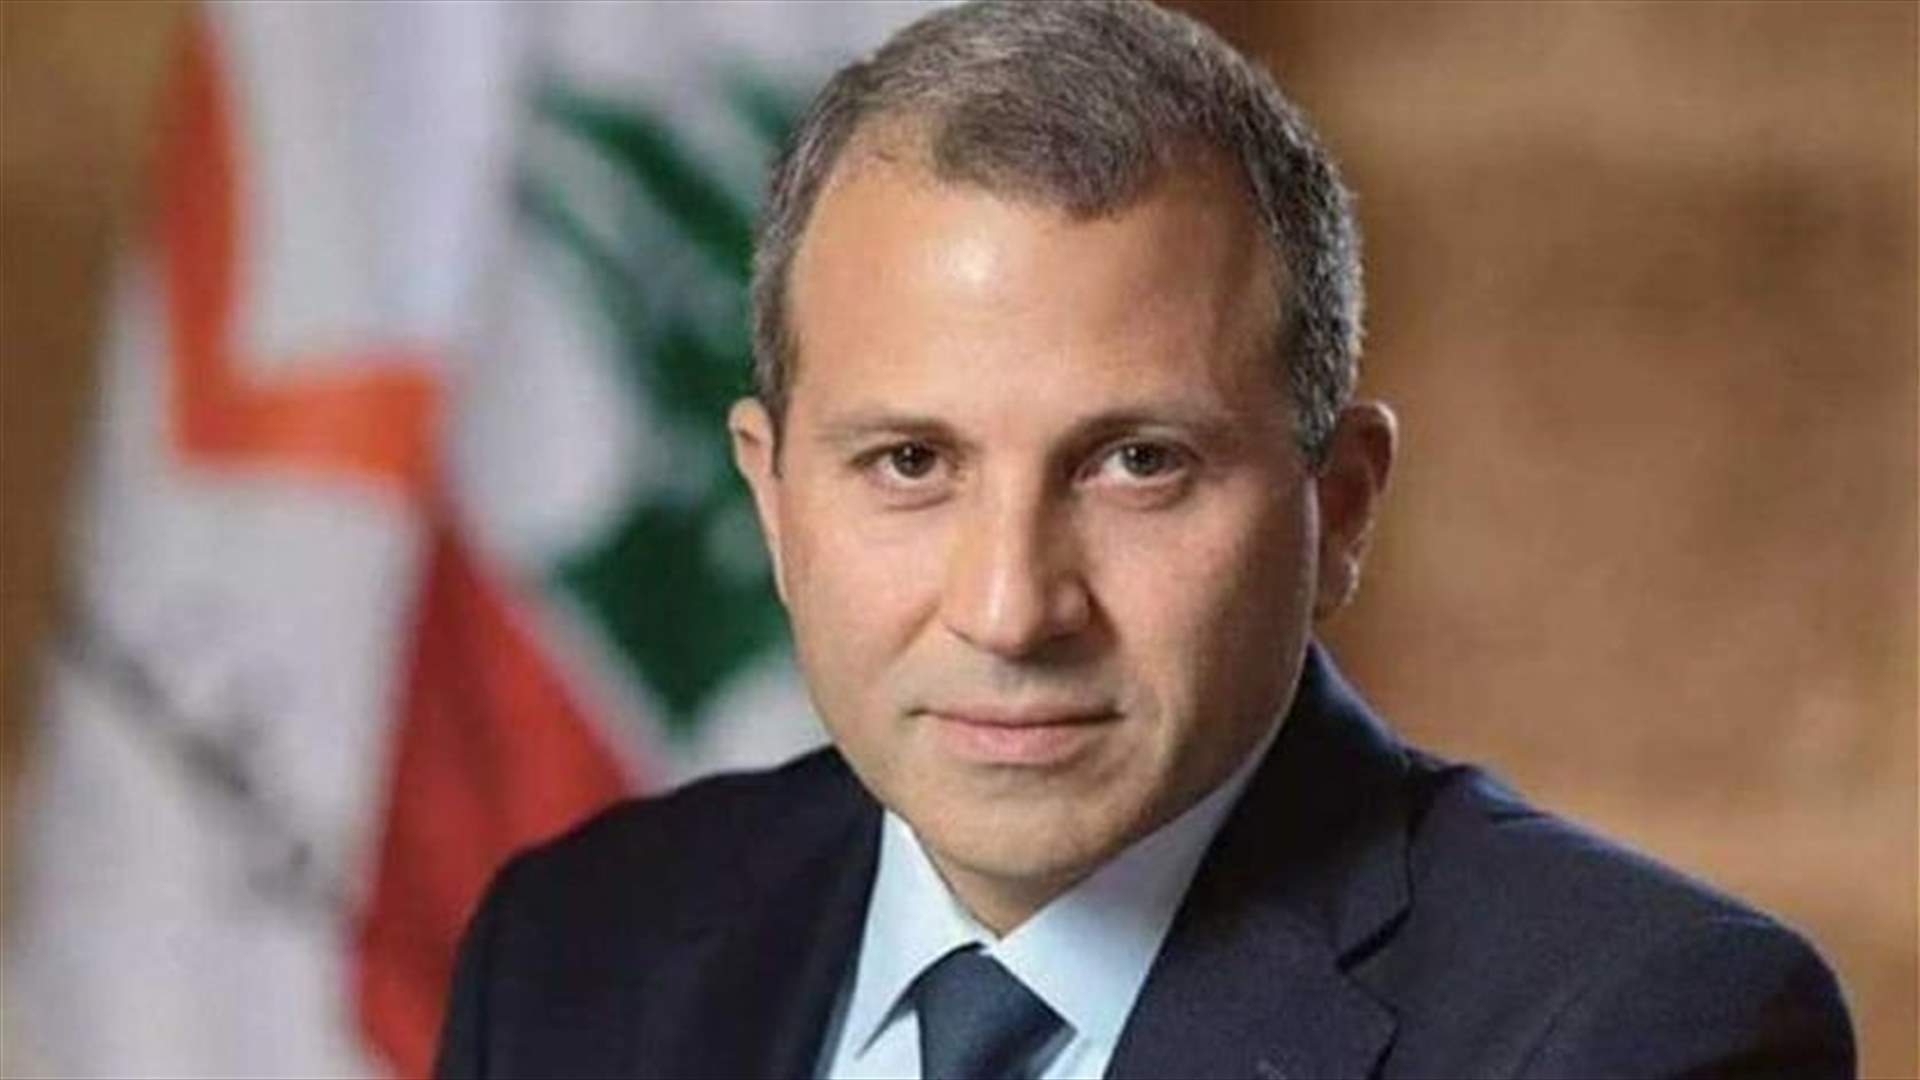 FPM leader Bassil continues presidential breakthrough efforts